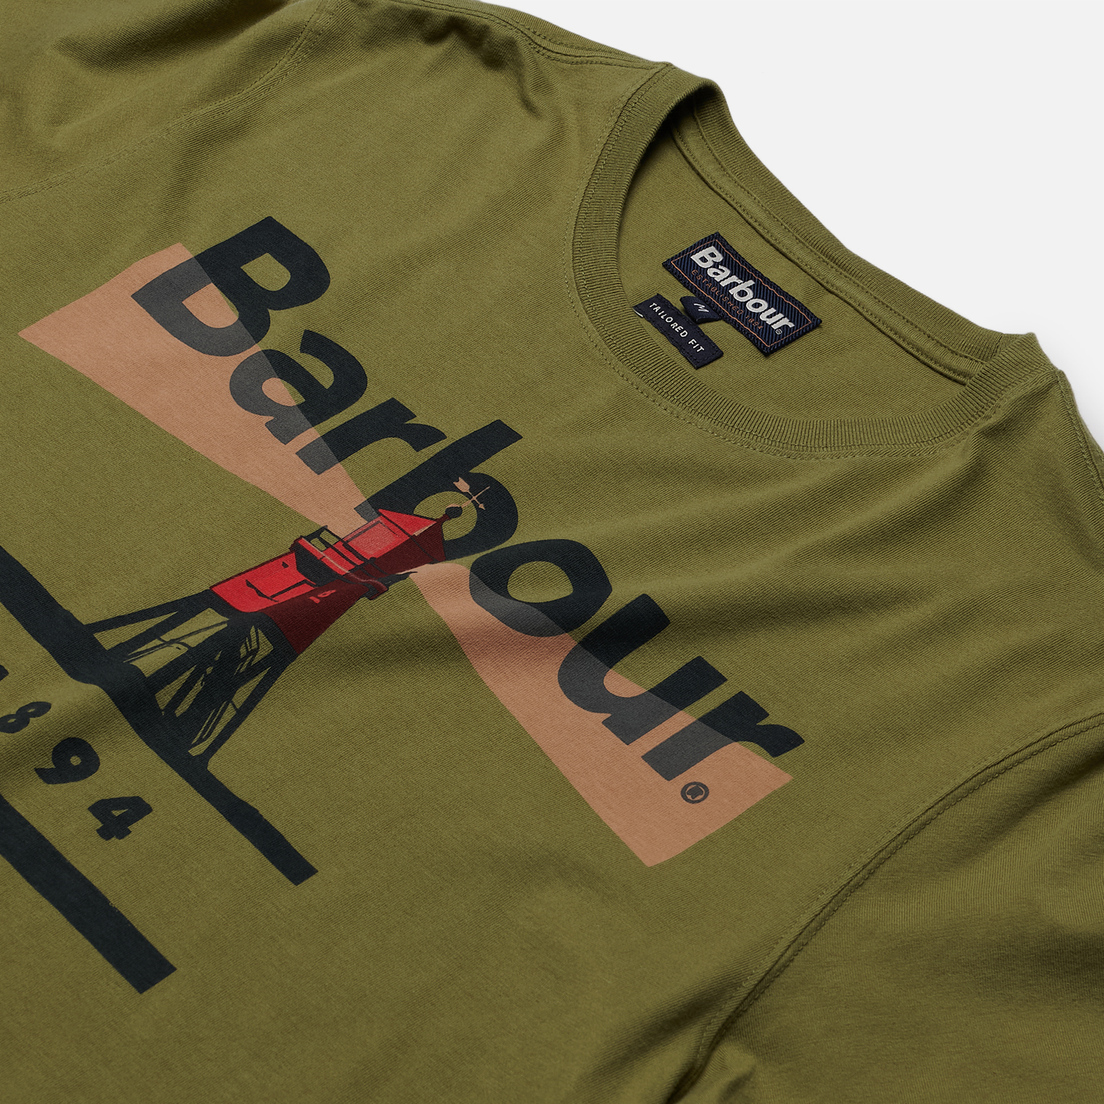 Barbour Мужская футболка Beacon 94